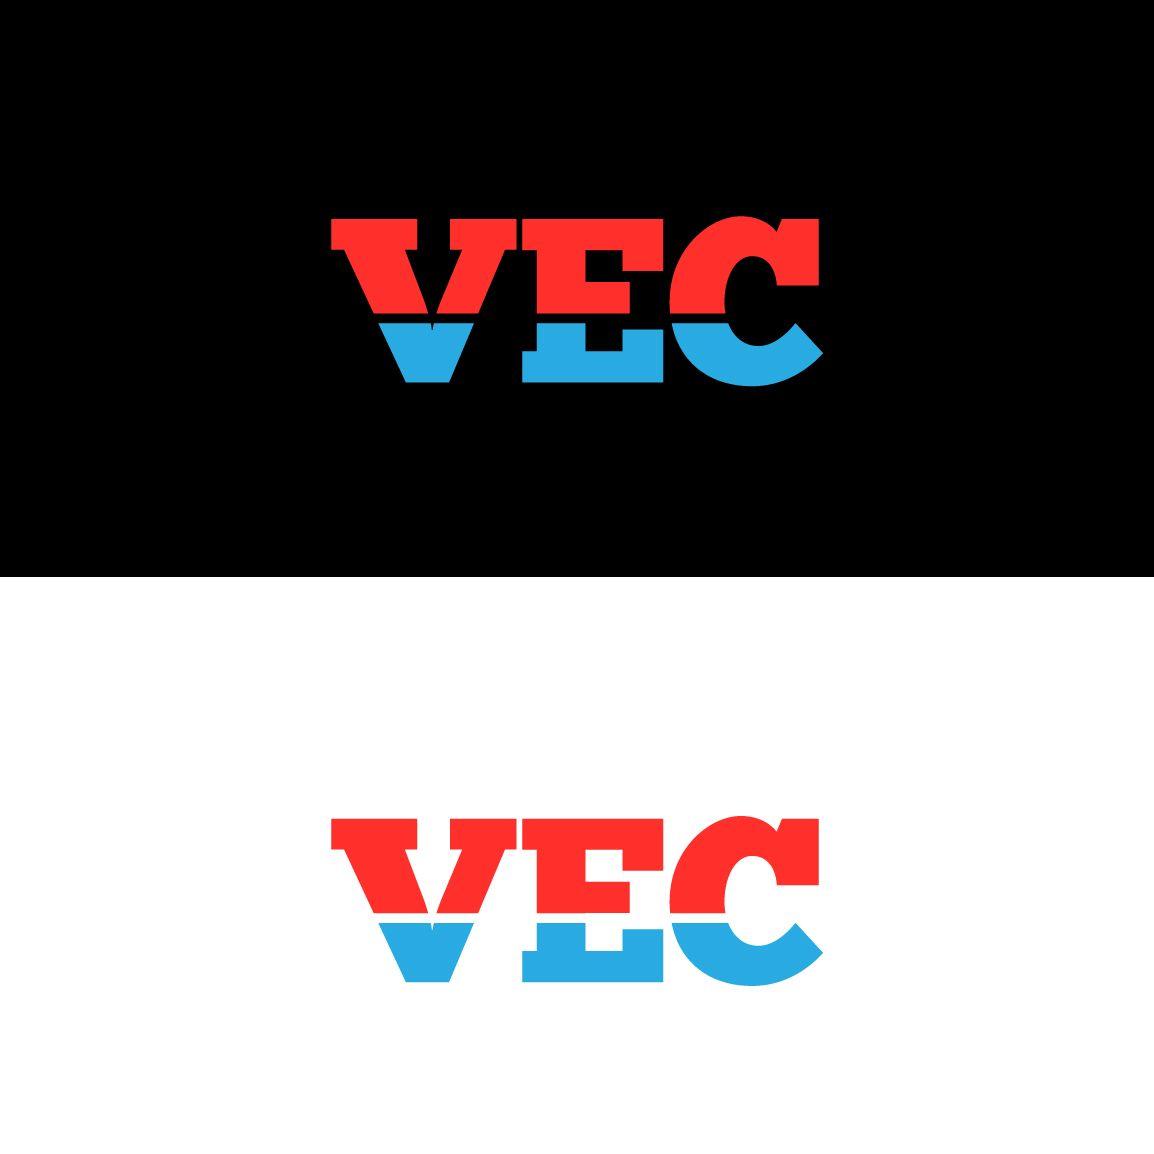 Vec Logo - Elegant, Playful Logo Design for VEC by Fanol Ademi. Design